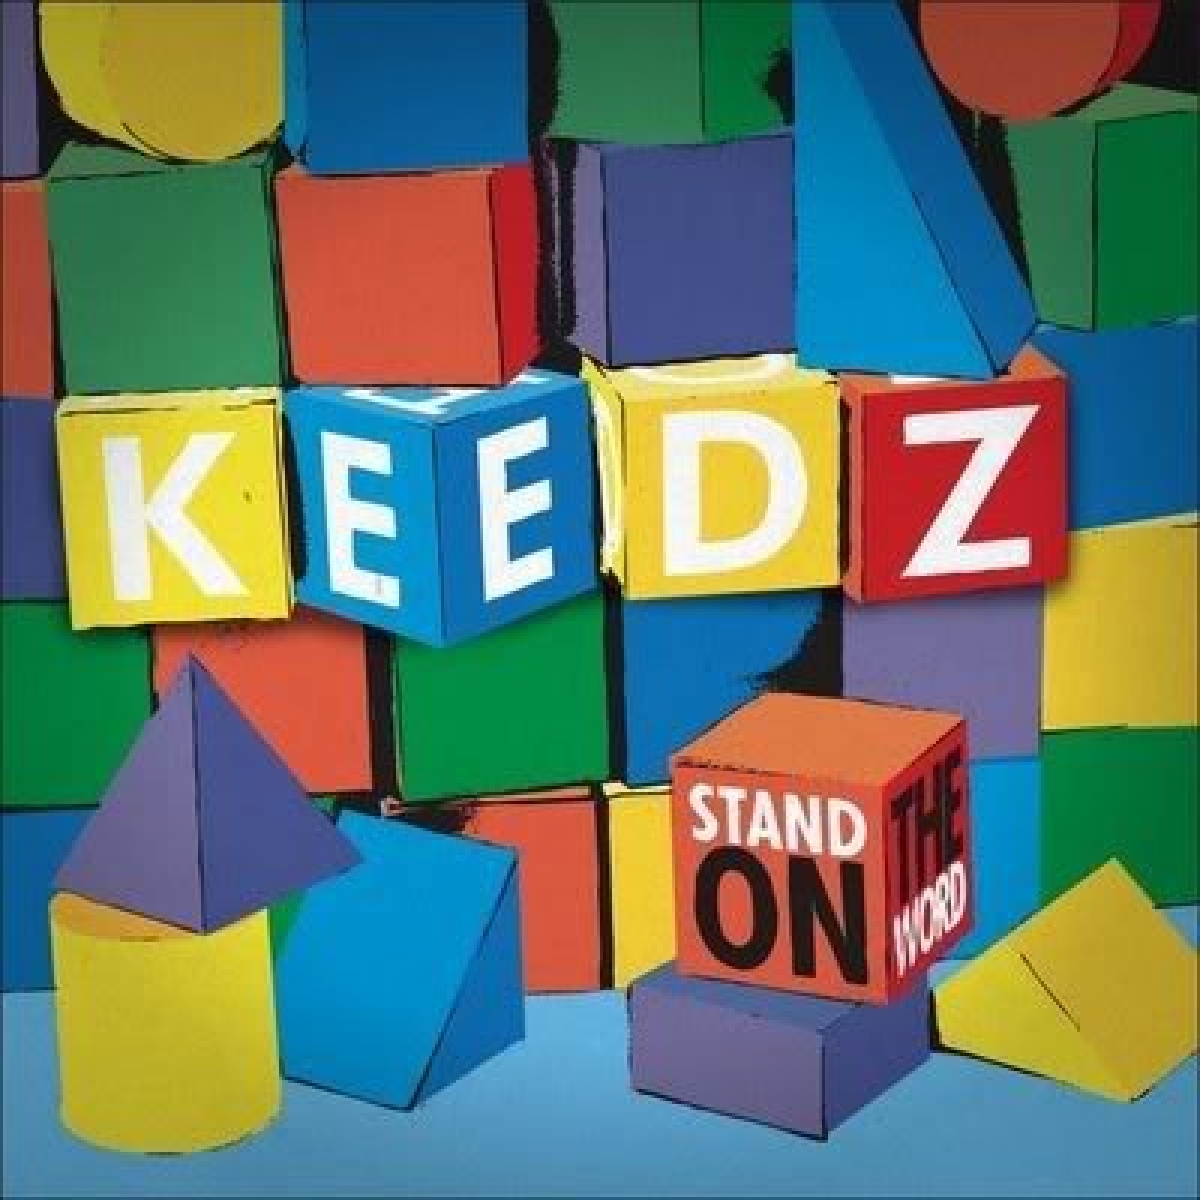 KEEDZ - Stand On The World